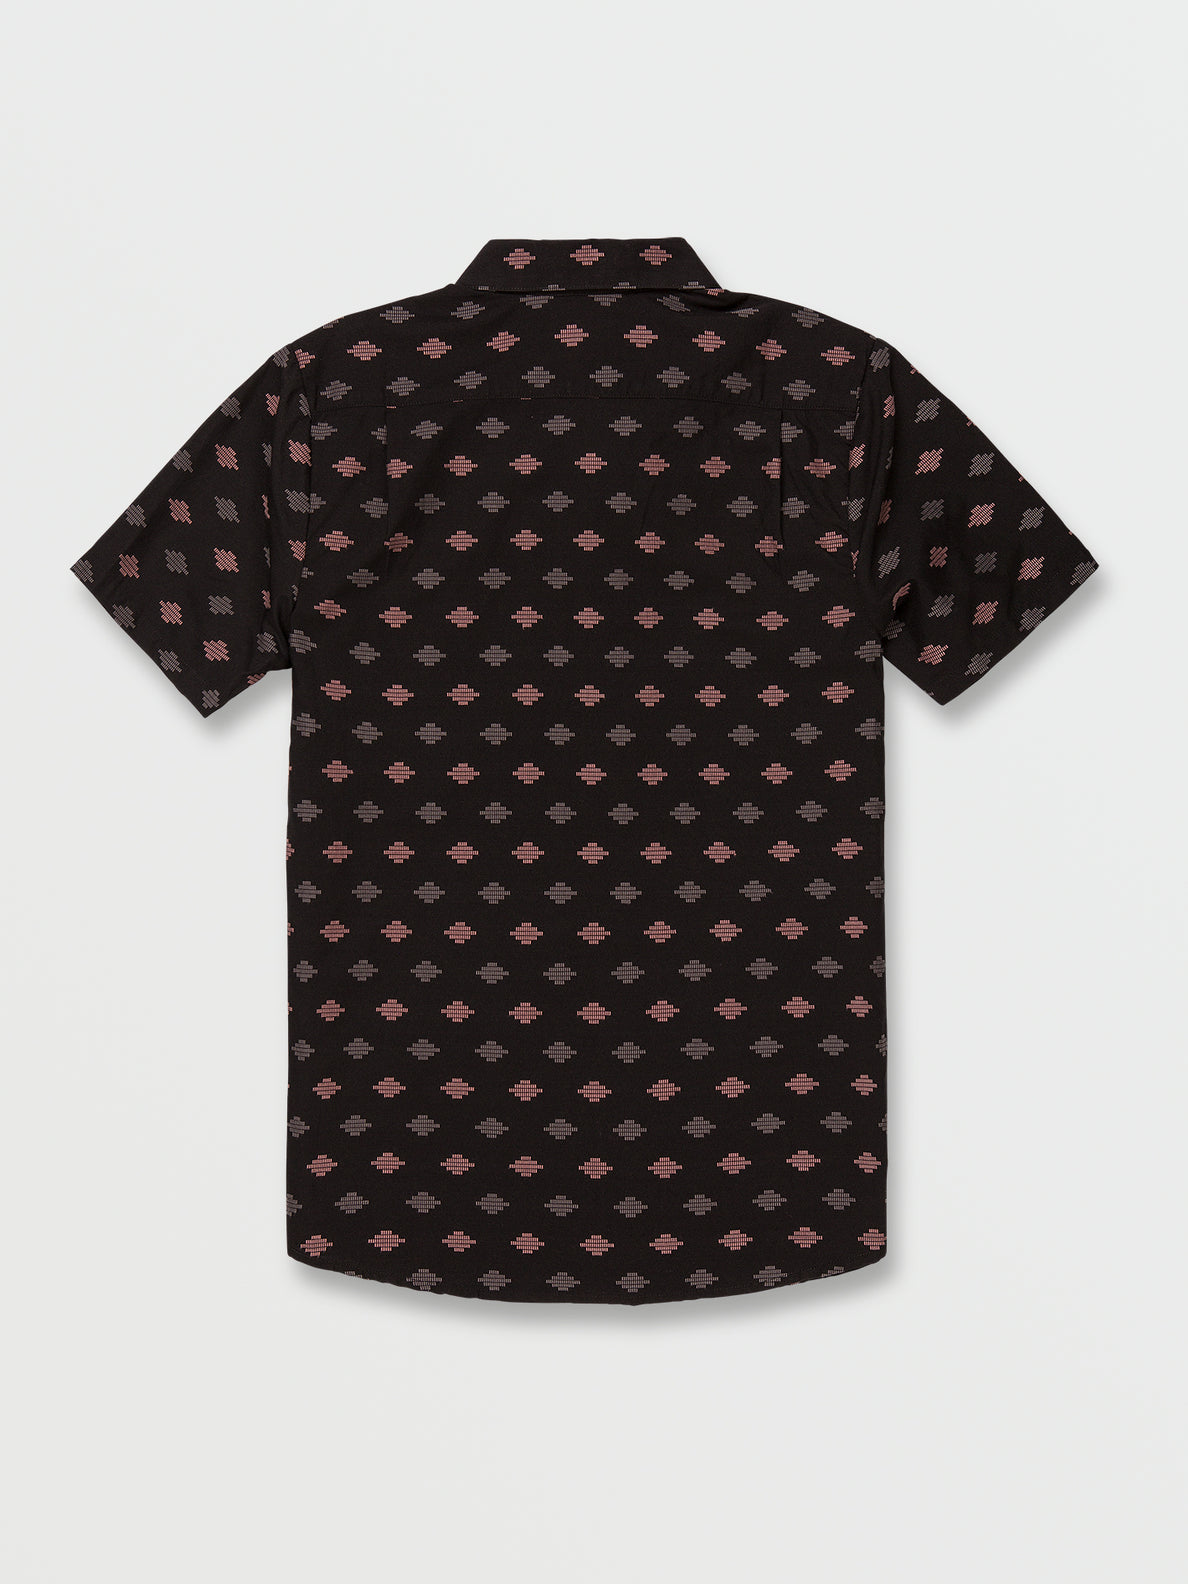 Stackstone Short Sleeve Shirt - Rinsed Black (A0412306_RIB) [B]